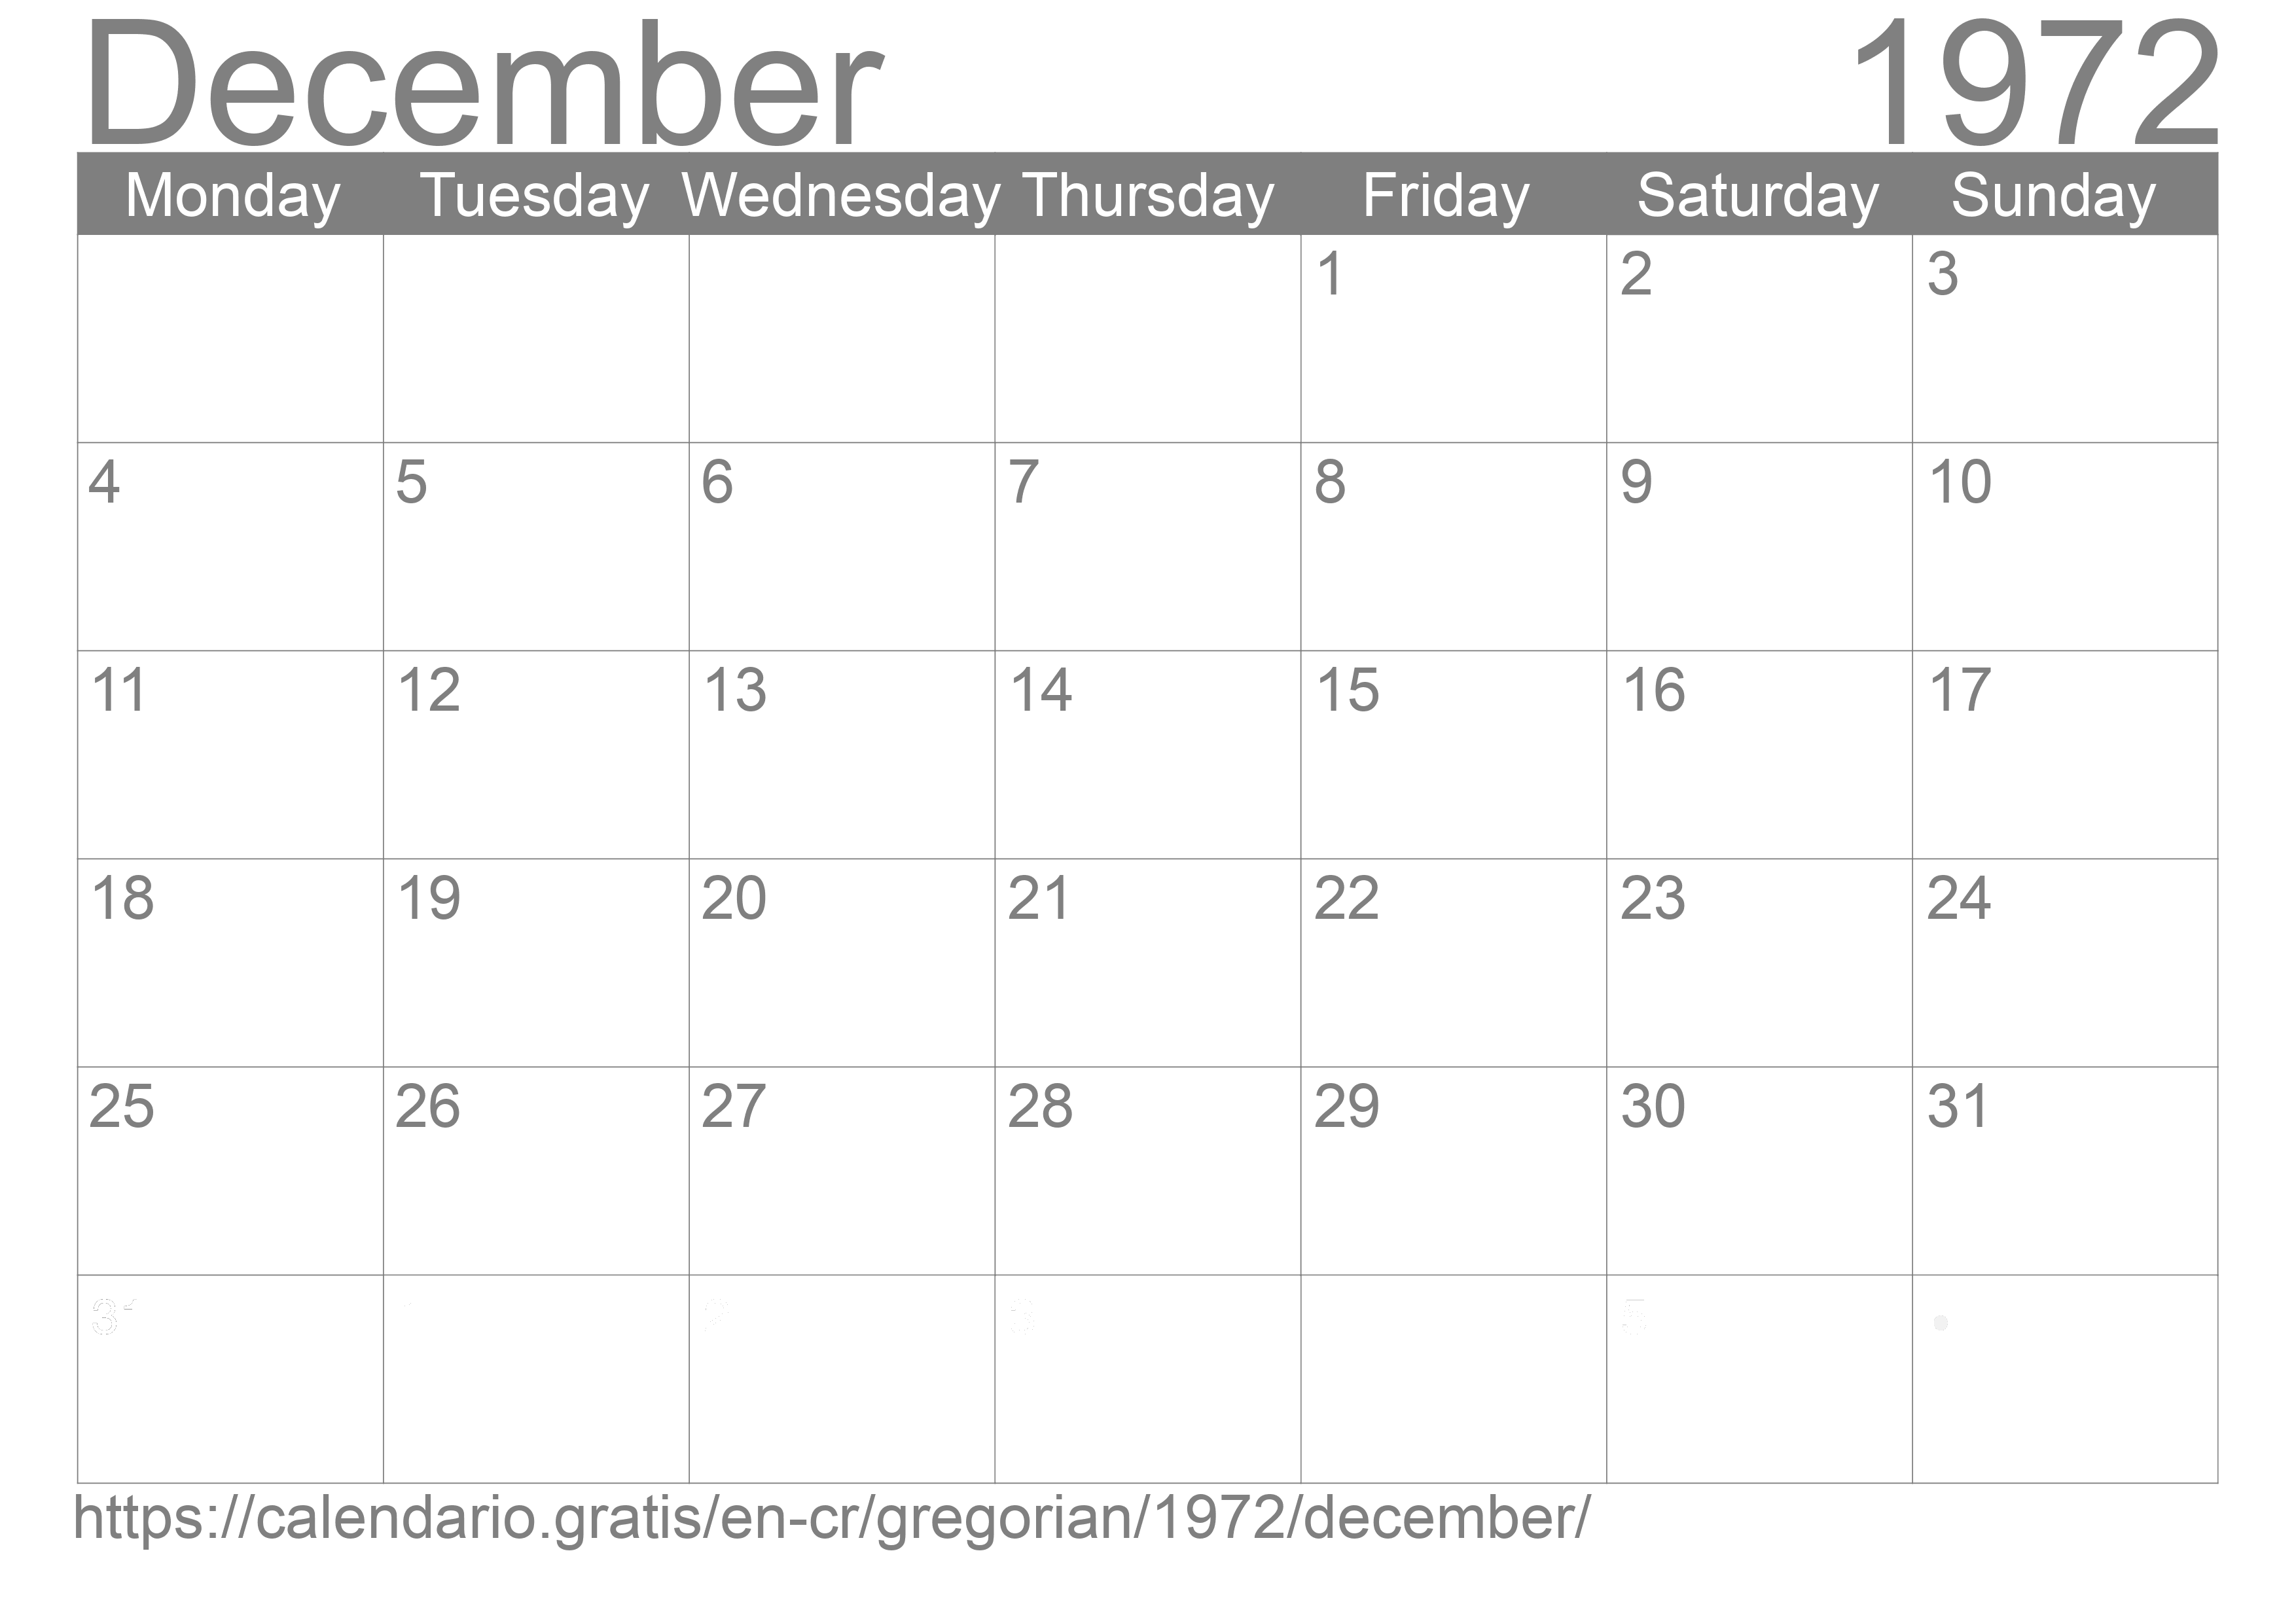 Calendar December 1972 to print